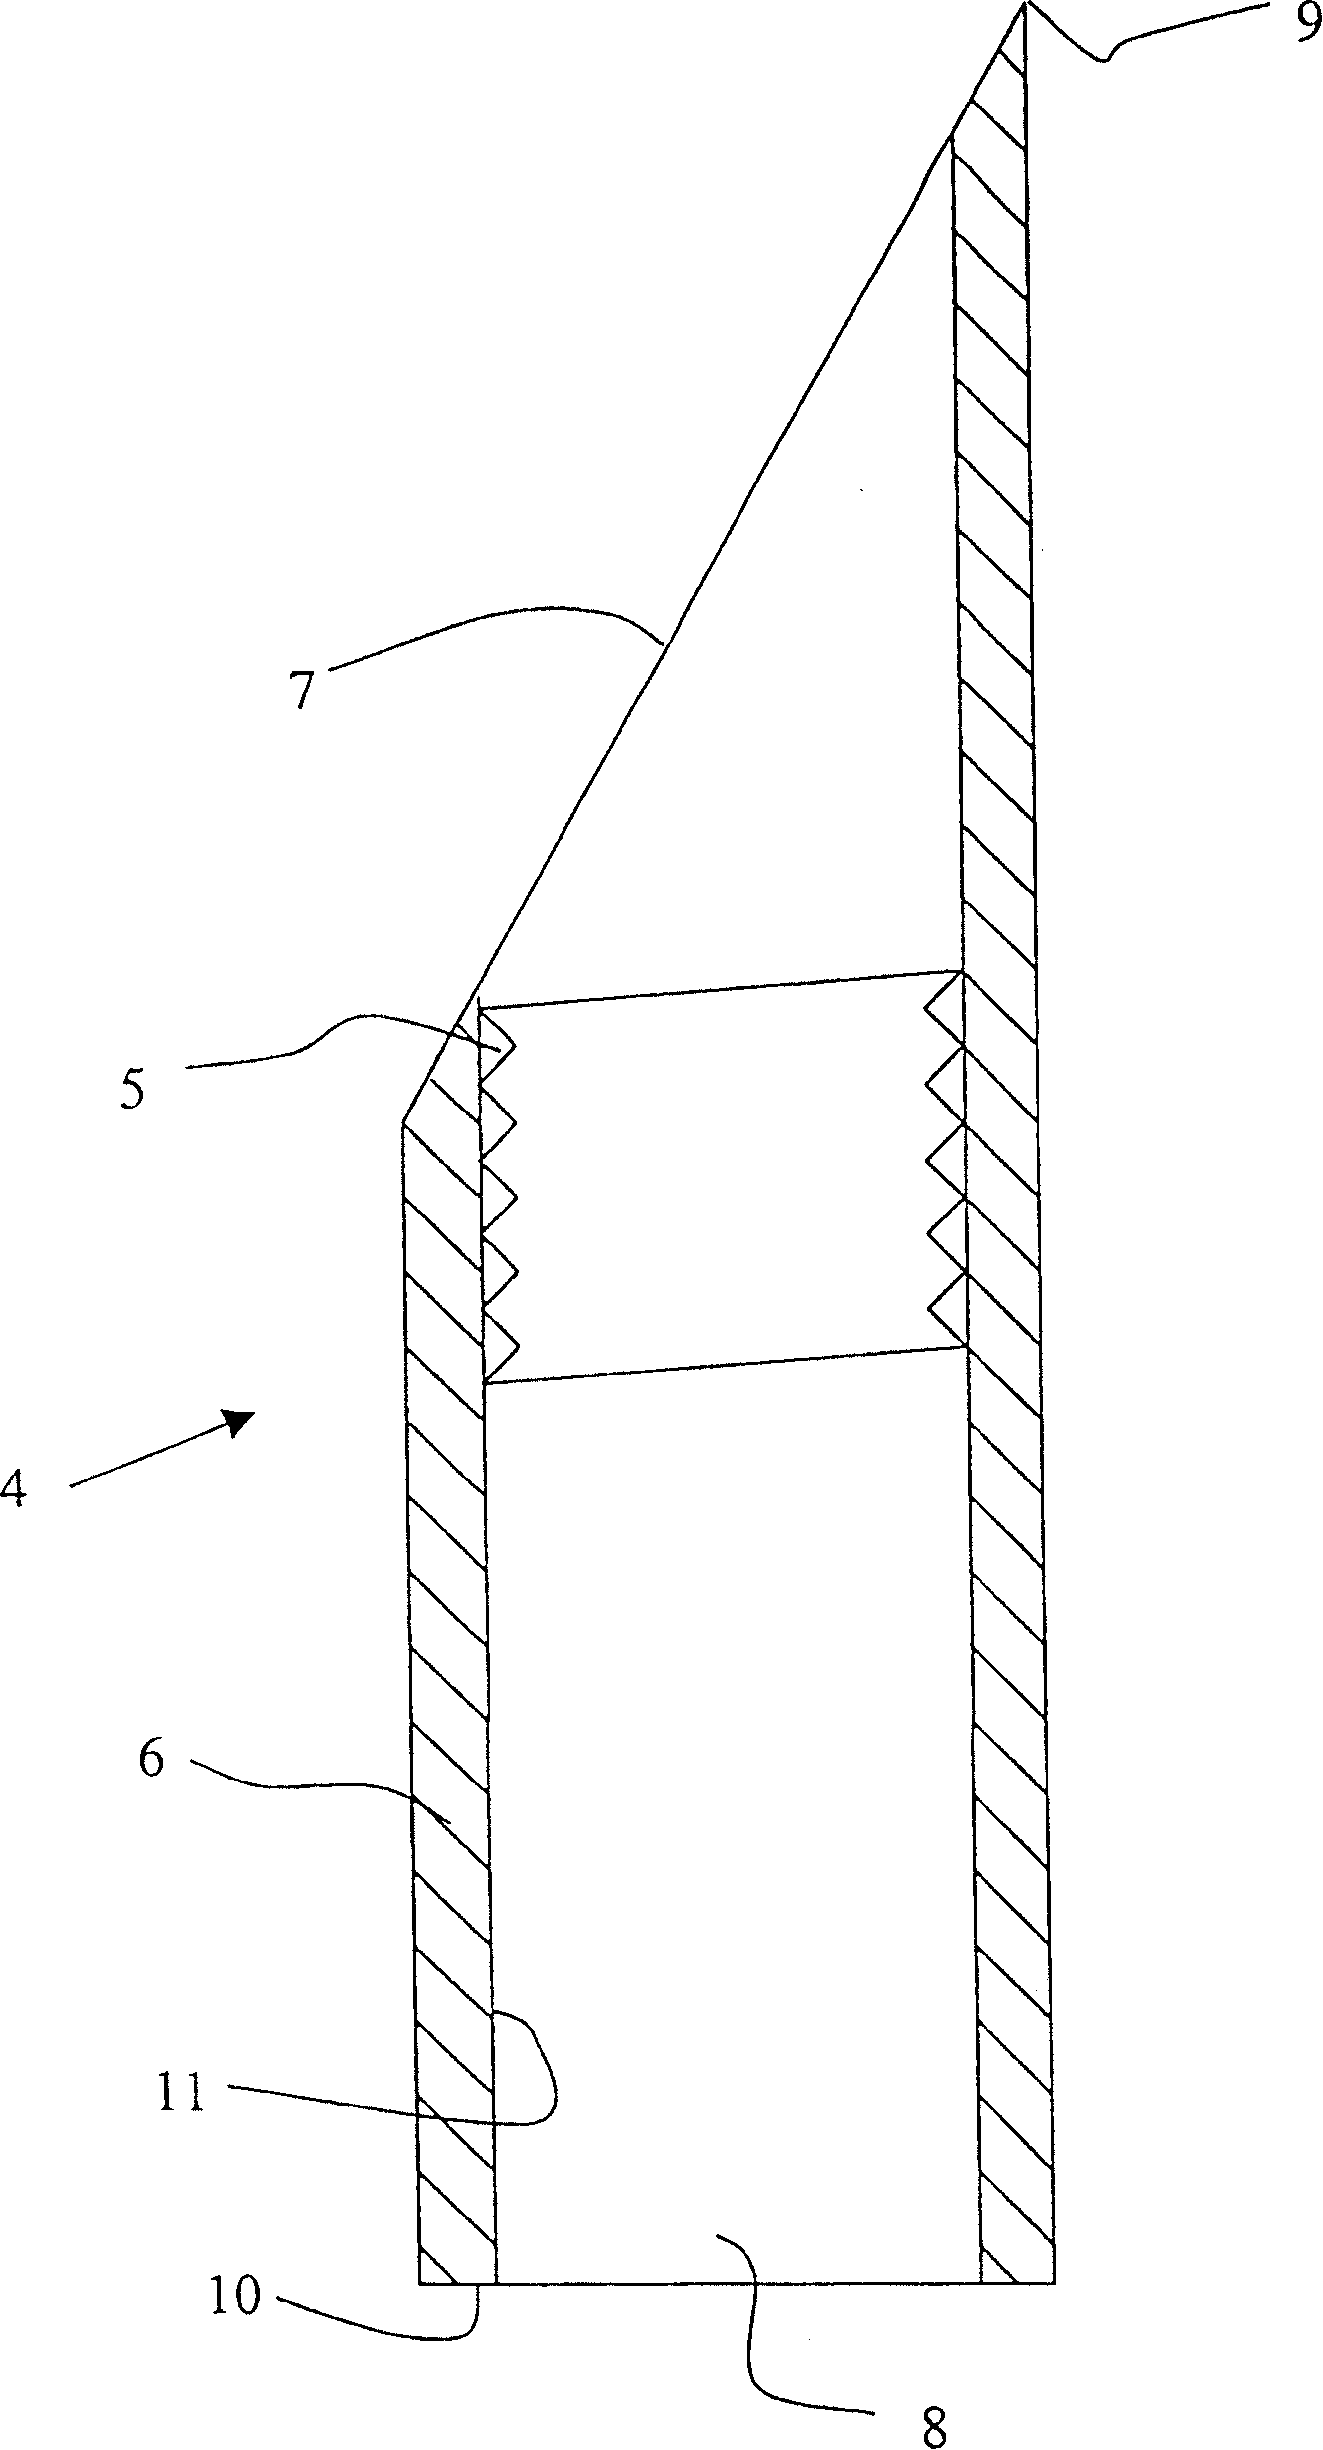 Method of manufacturing wind turbine blade